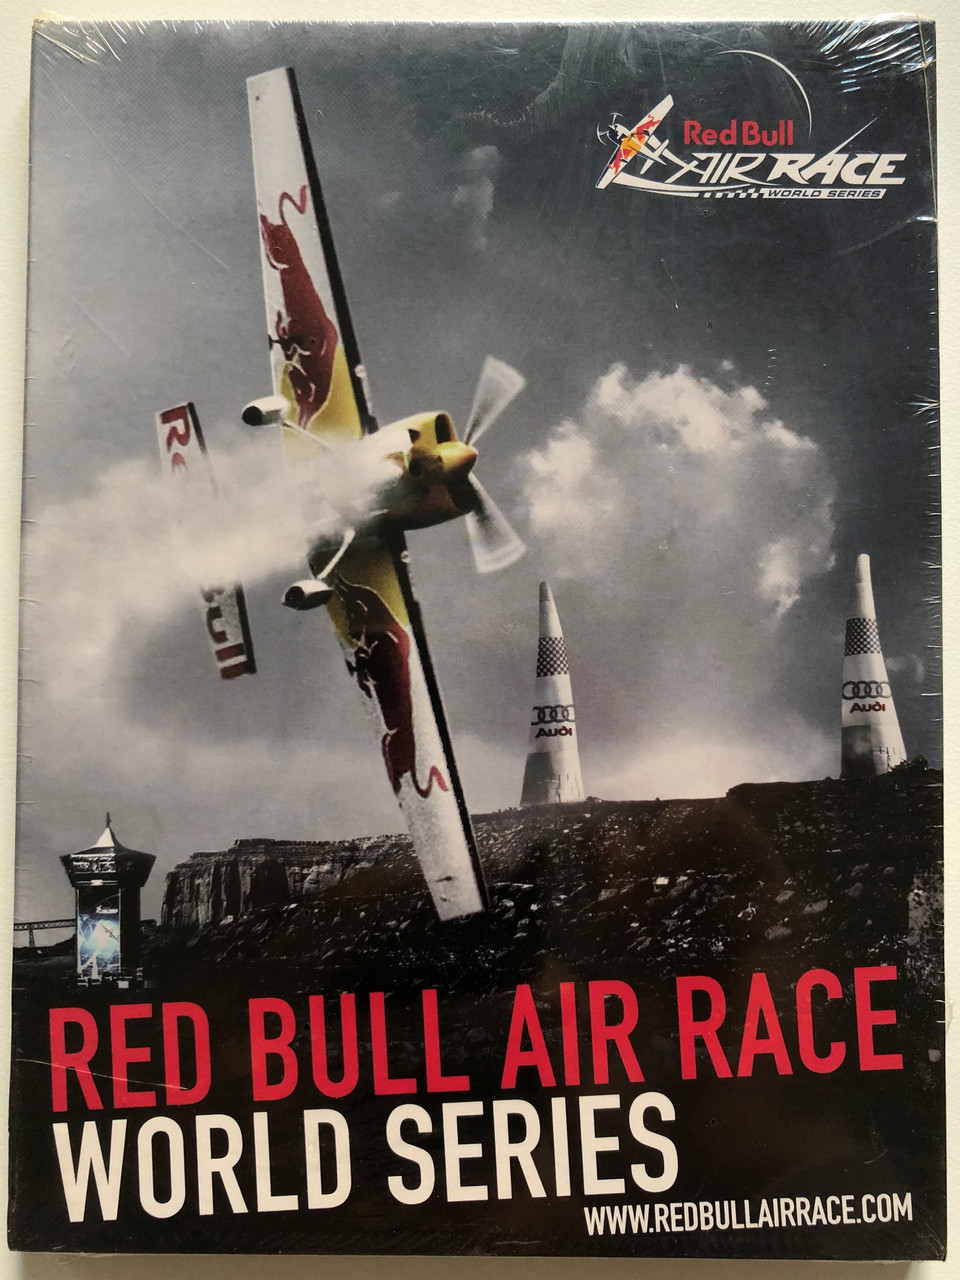 Red Bull Air Race World Series / Warner Music Entertainment DVD Video 2007  - bibleinmylanguage